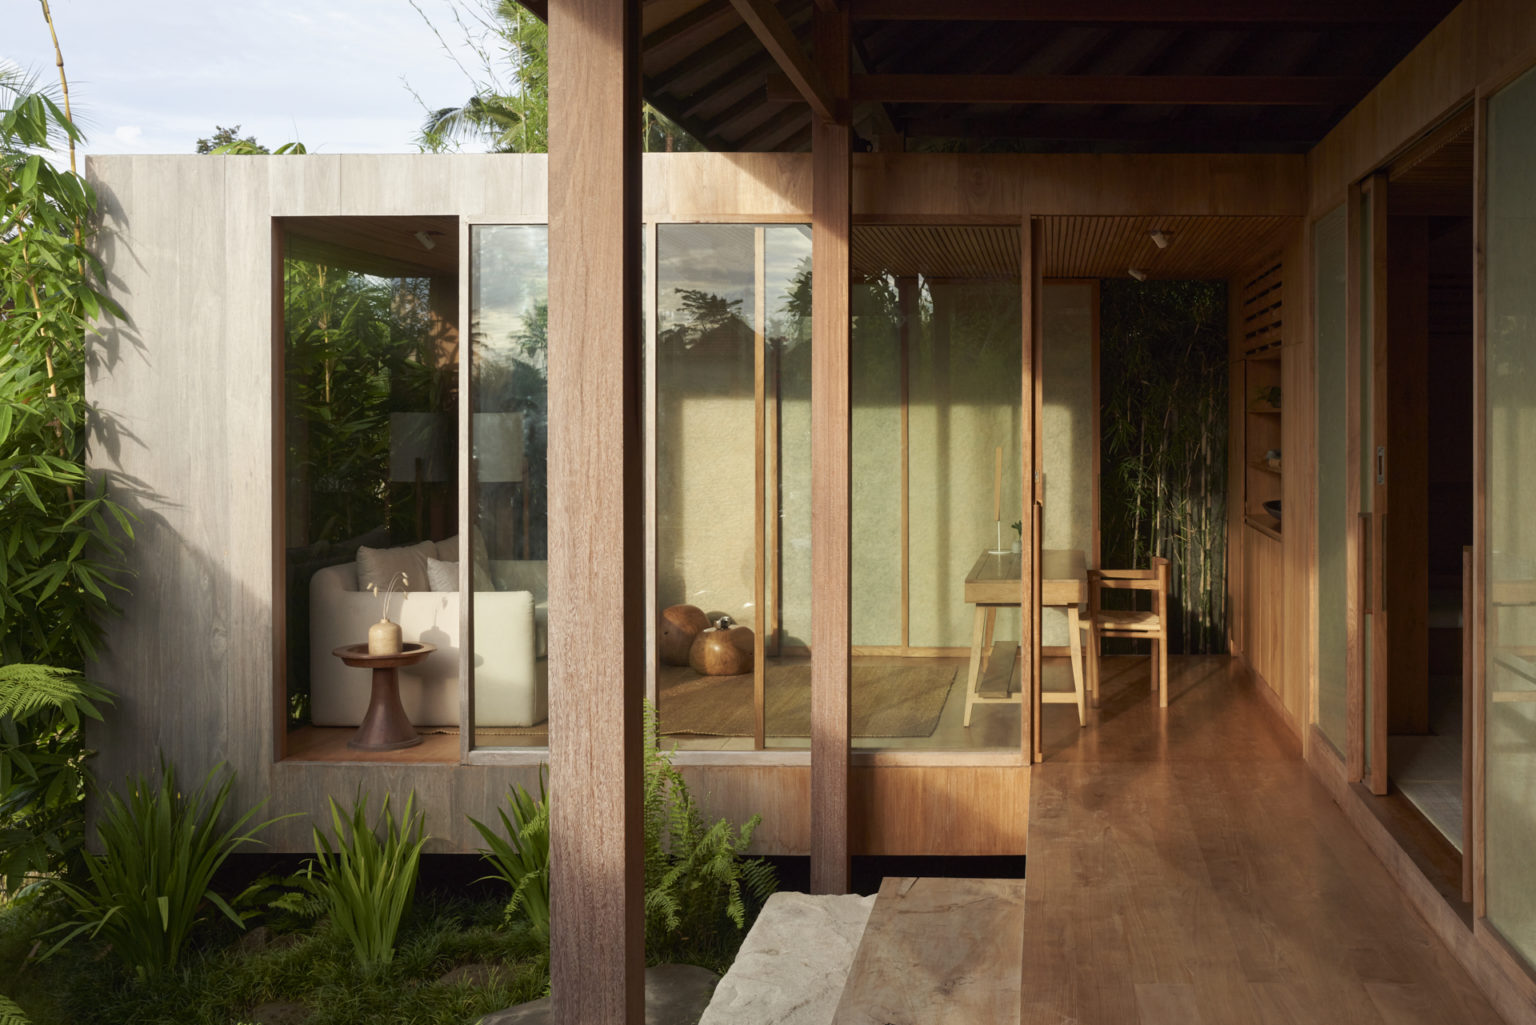 Her-Private-Studio-in-Bali | Japanese-Inspired-Interior-Design | Softer-Volumes